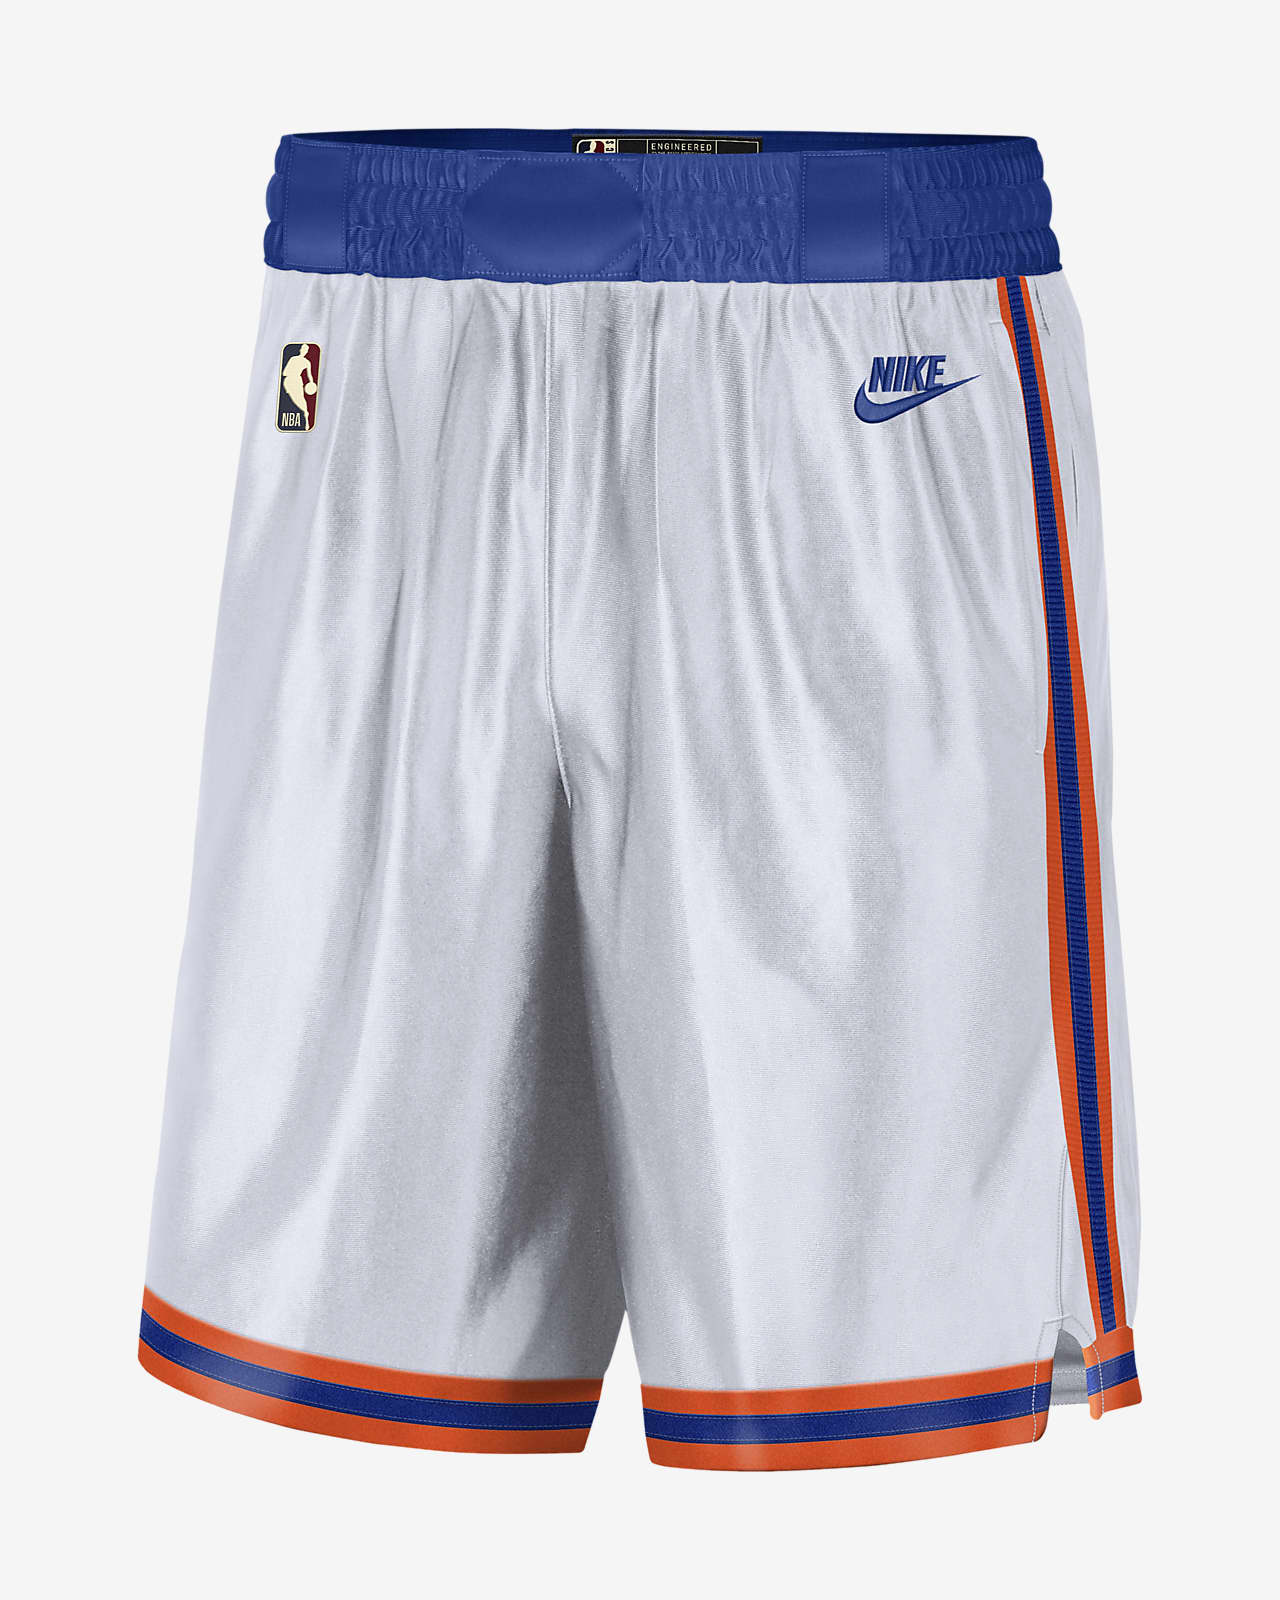 New York Knicks Classic Edition Nike Dri-FIT NBA Swingman Shorts